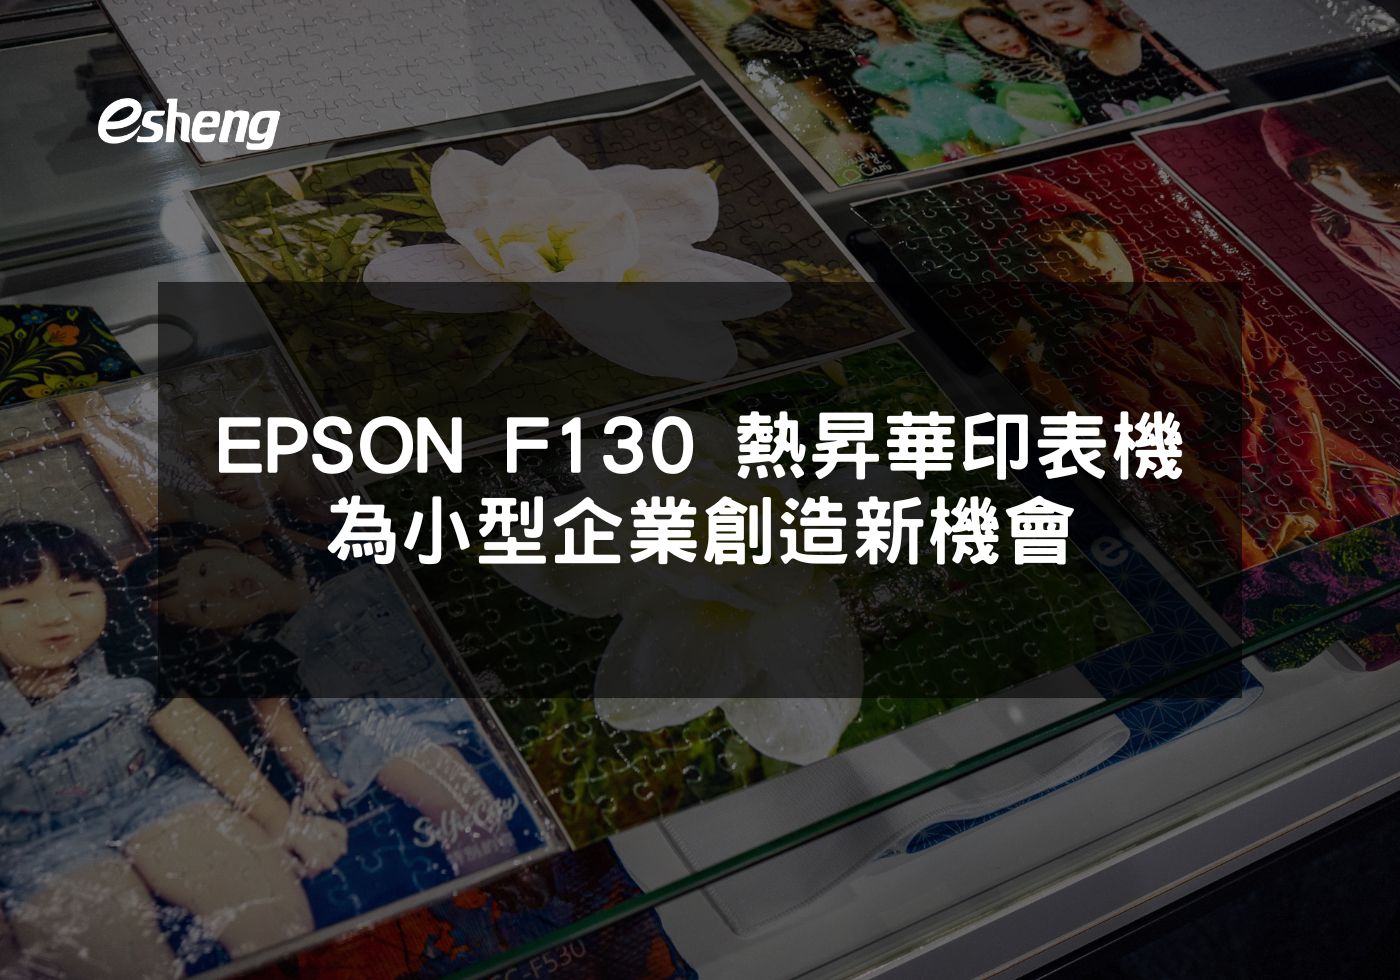 EPSON F130 熱昇華印表機 為小型企業創造新機會